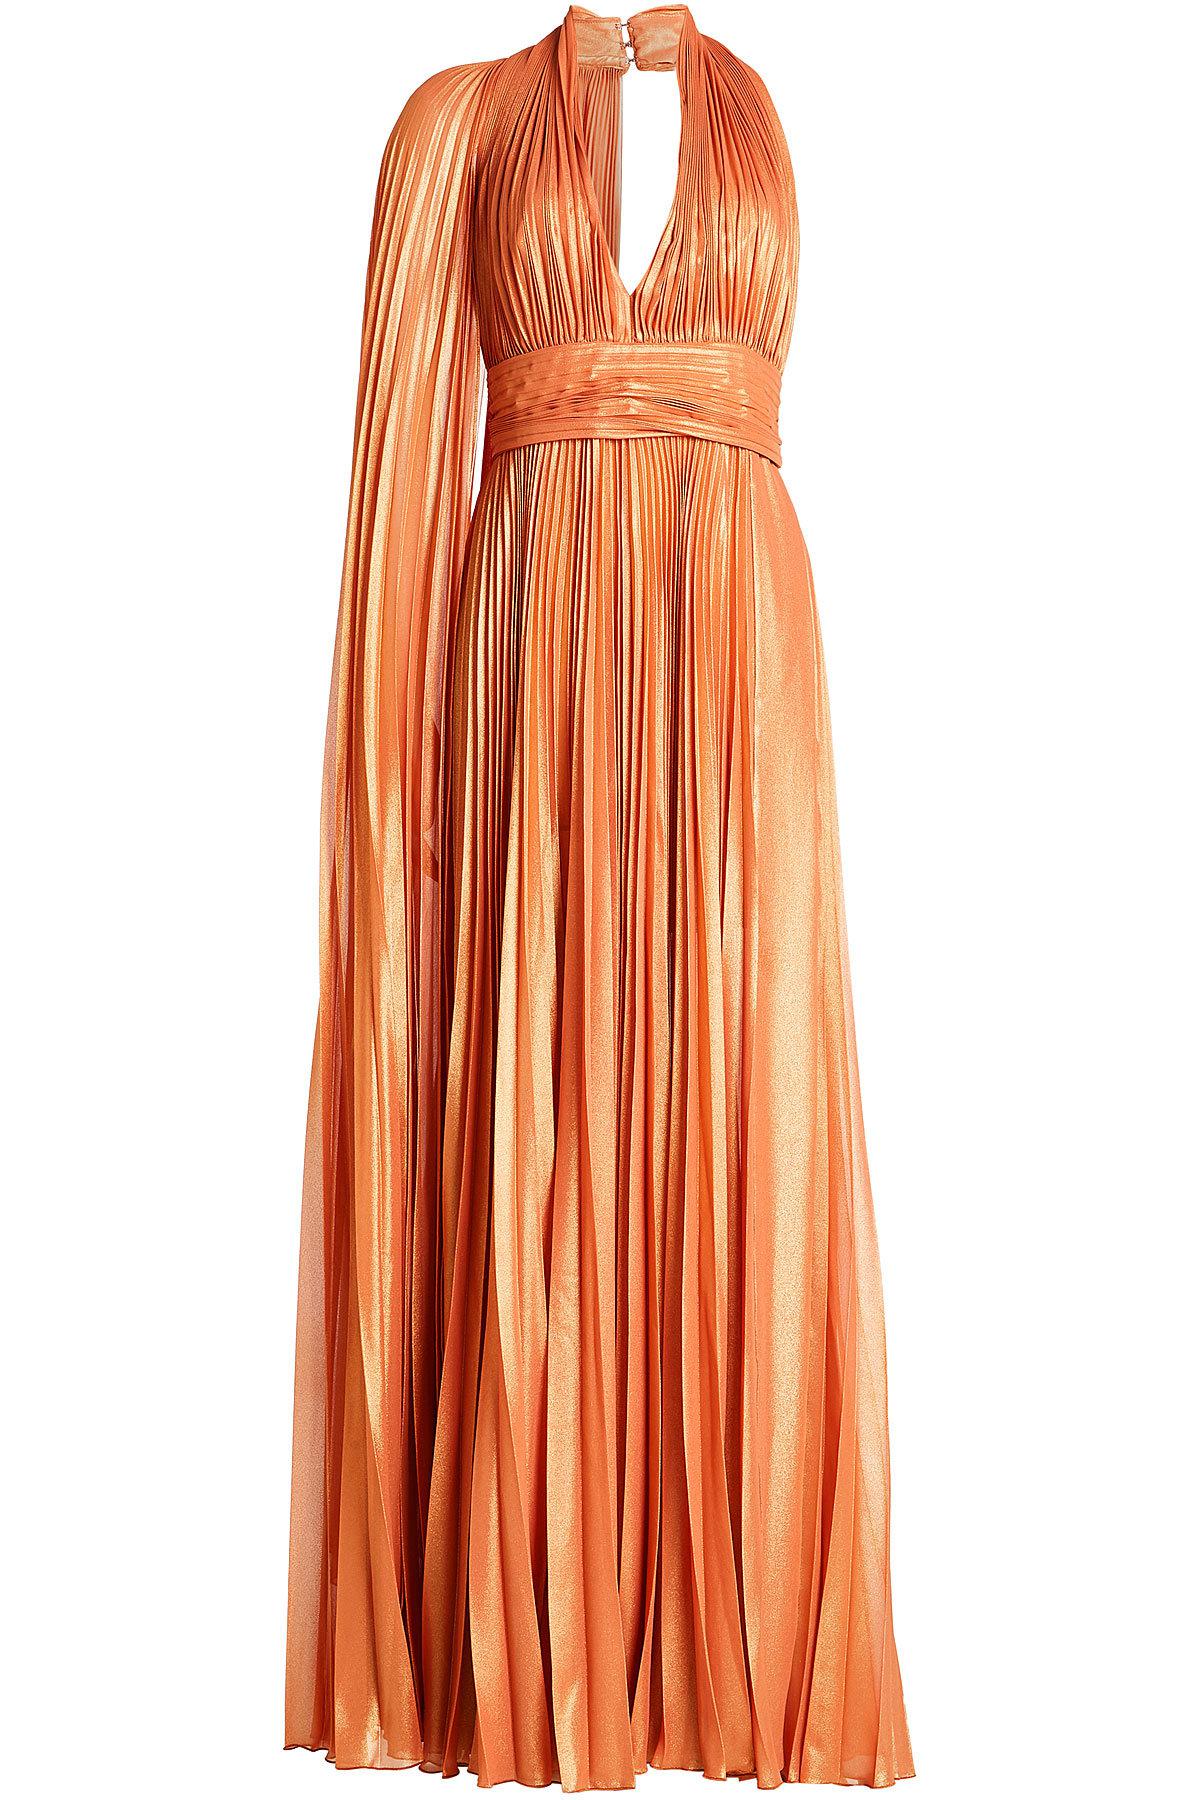 Lyst - Elie Saab Asymmetric Pleated Lamé Dress in Orange